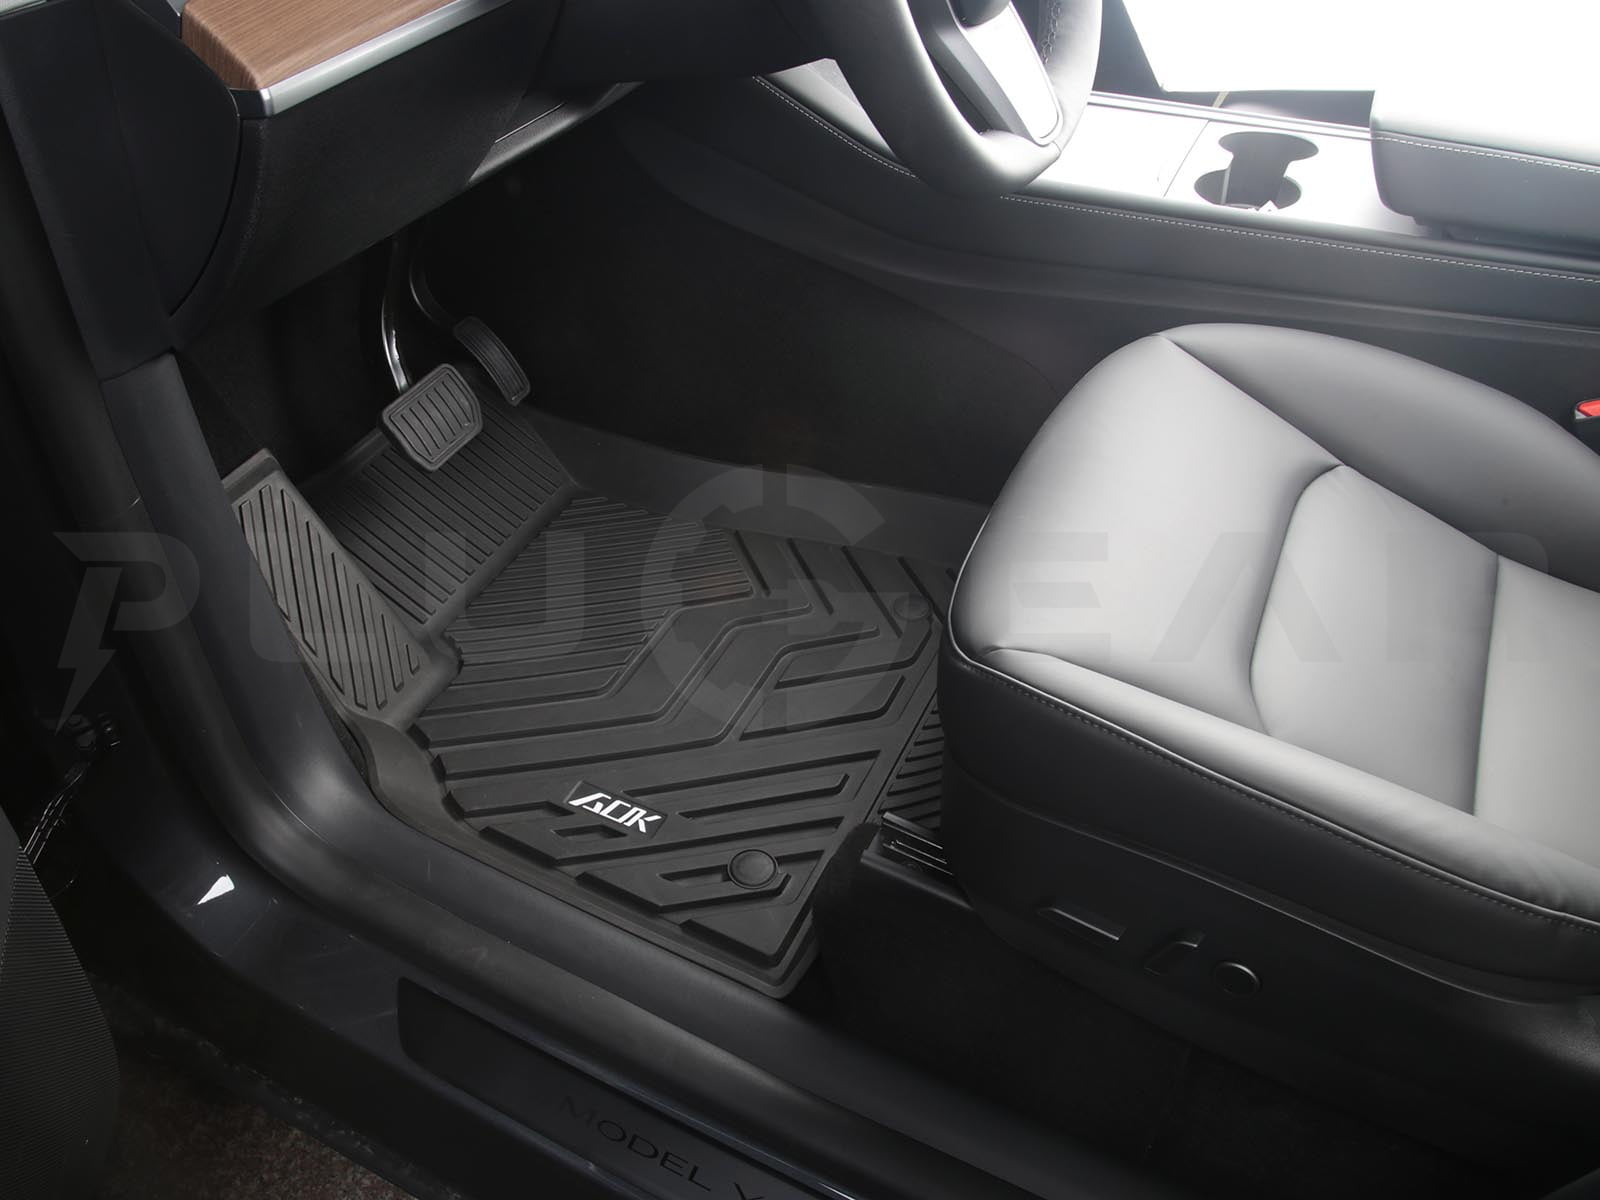 Tesla Model Y: All-weather Interior Floor Mat Set (3 pcs, Premium